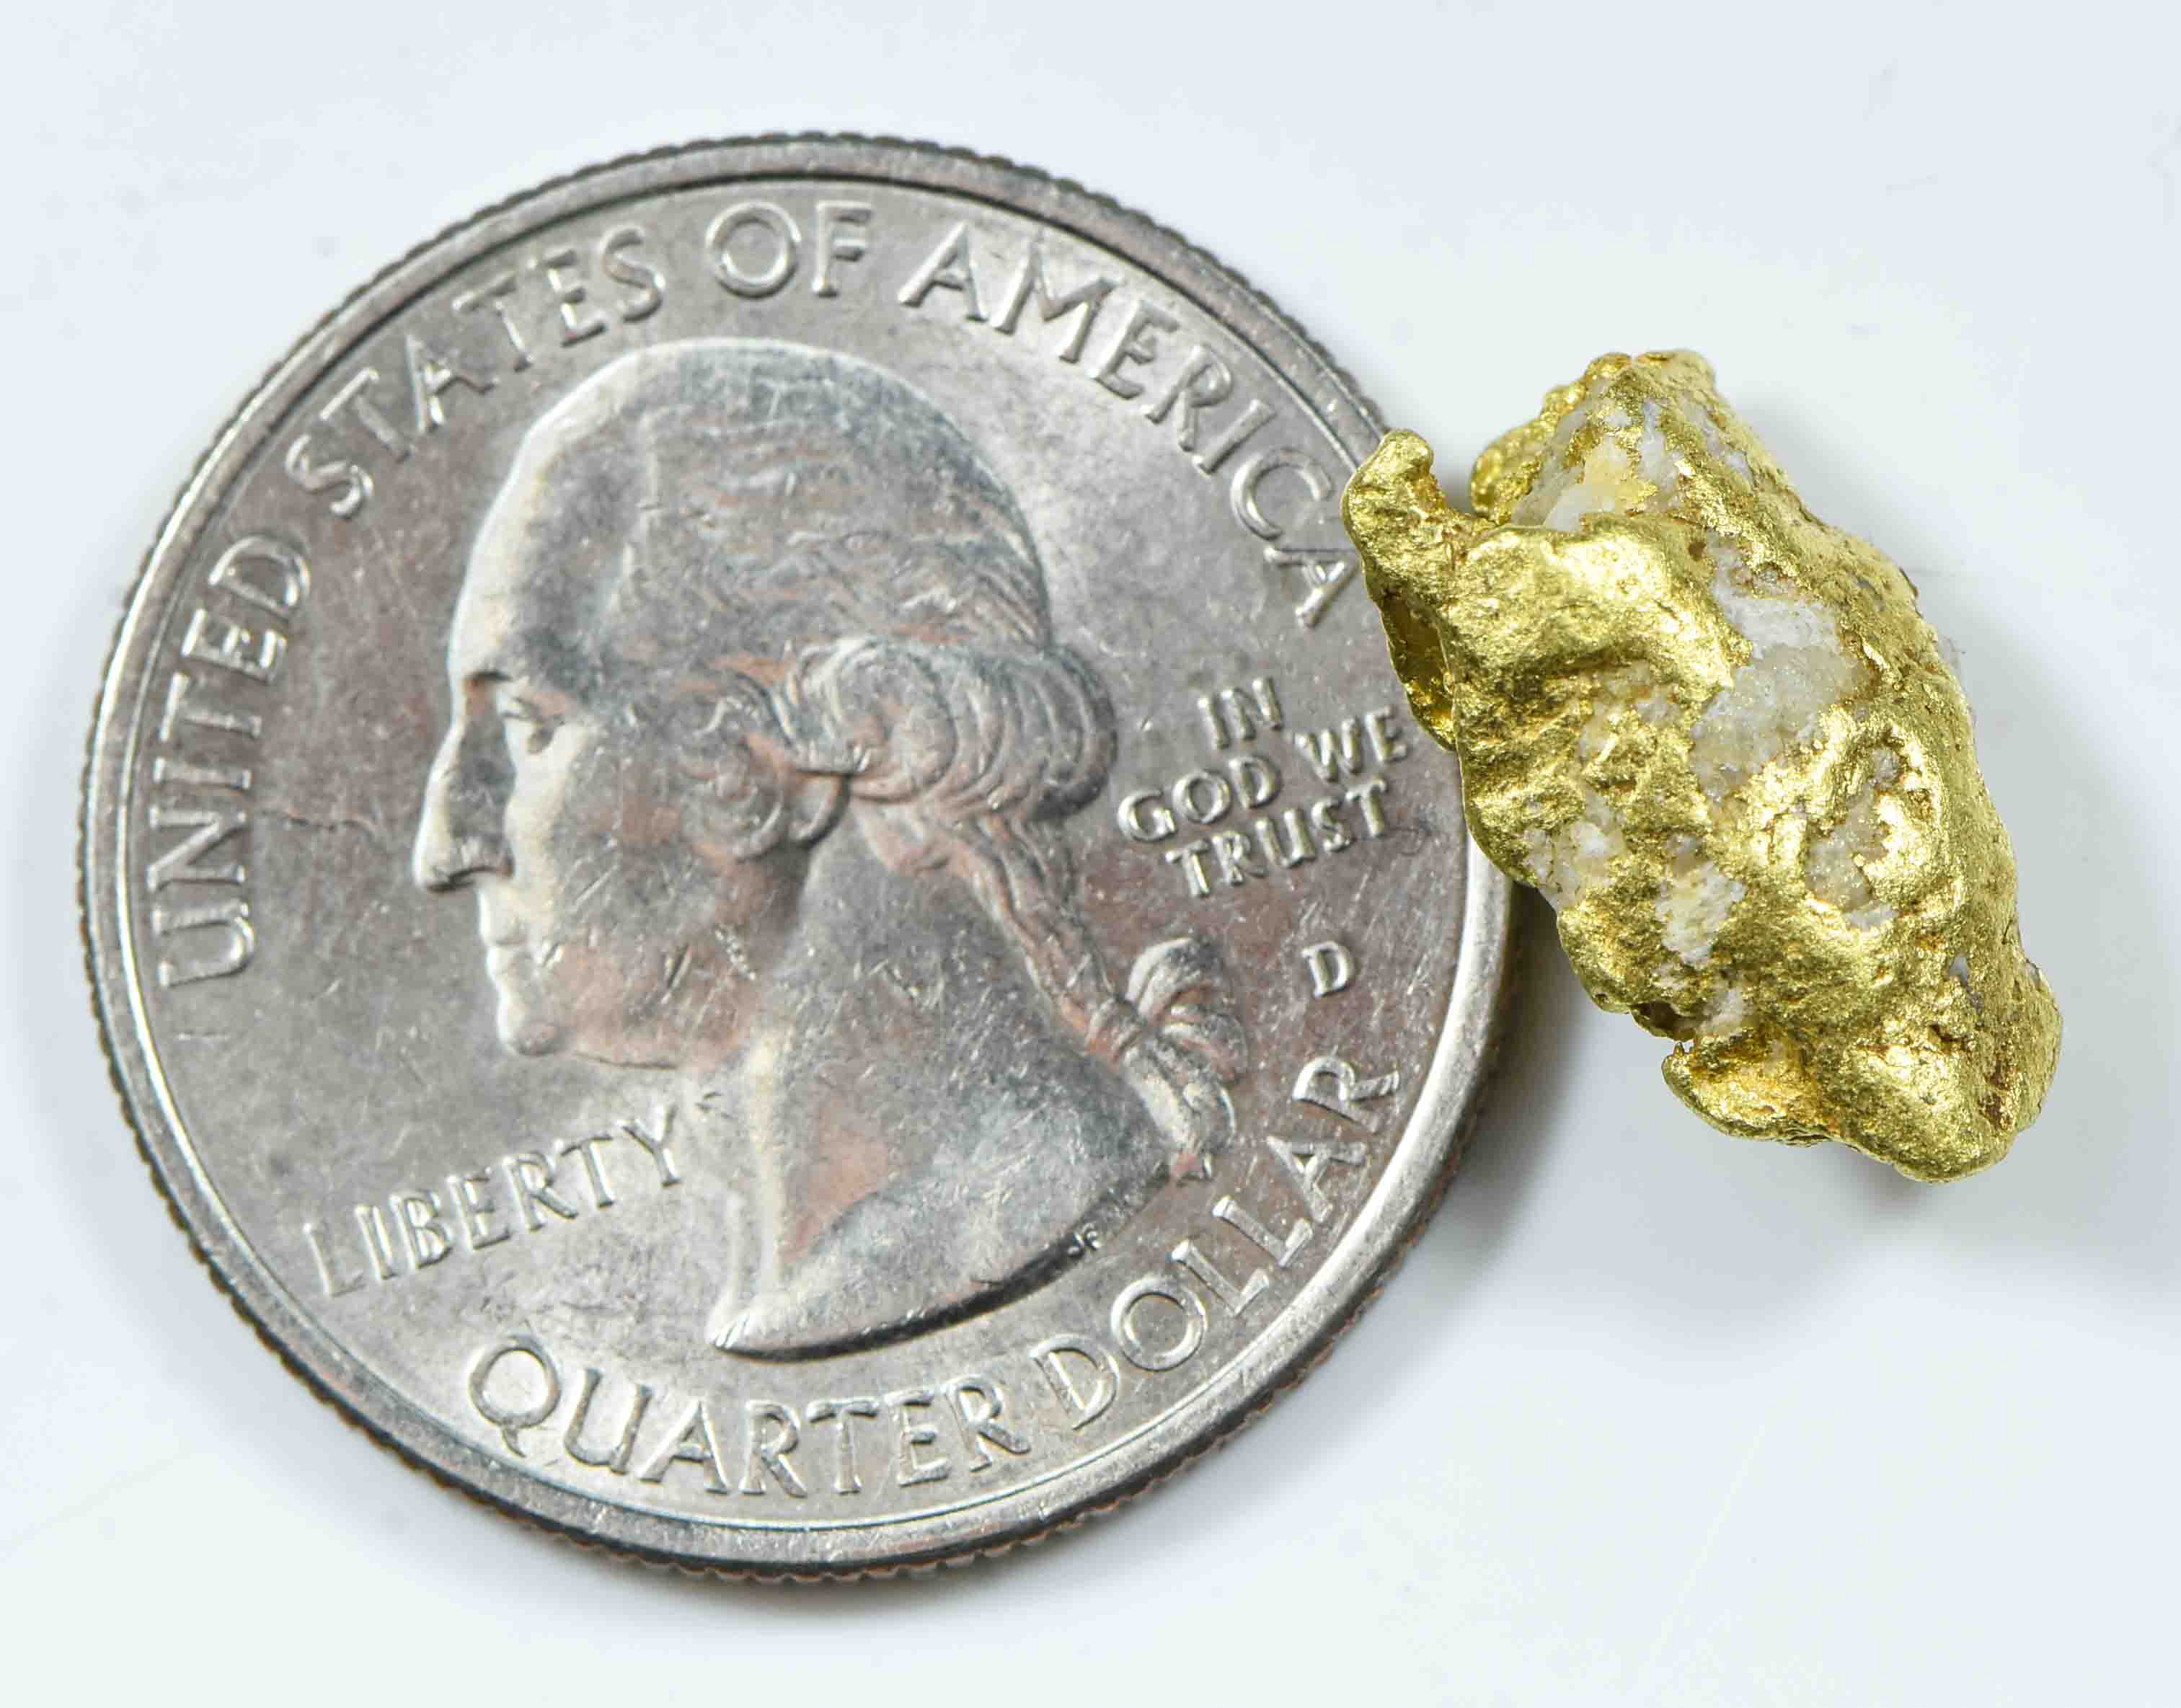 QN-67 "Alaskan BC Gold Nuggets with Quartz" Genuine 3.68 Grams